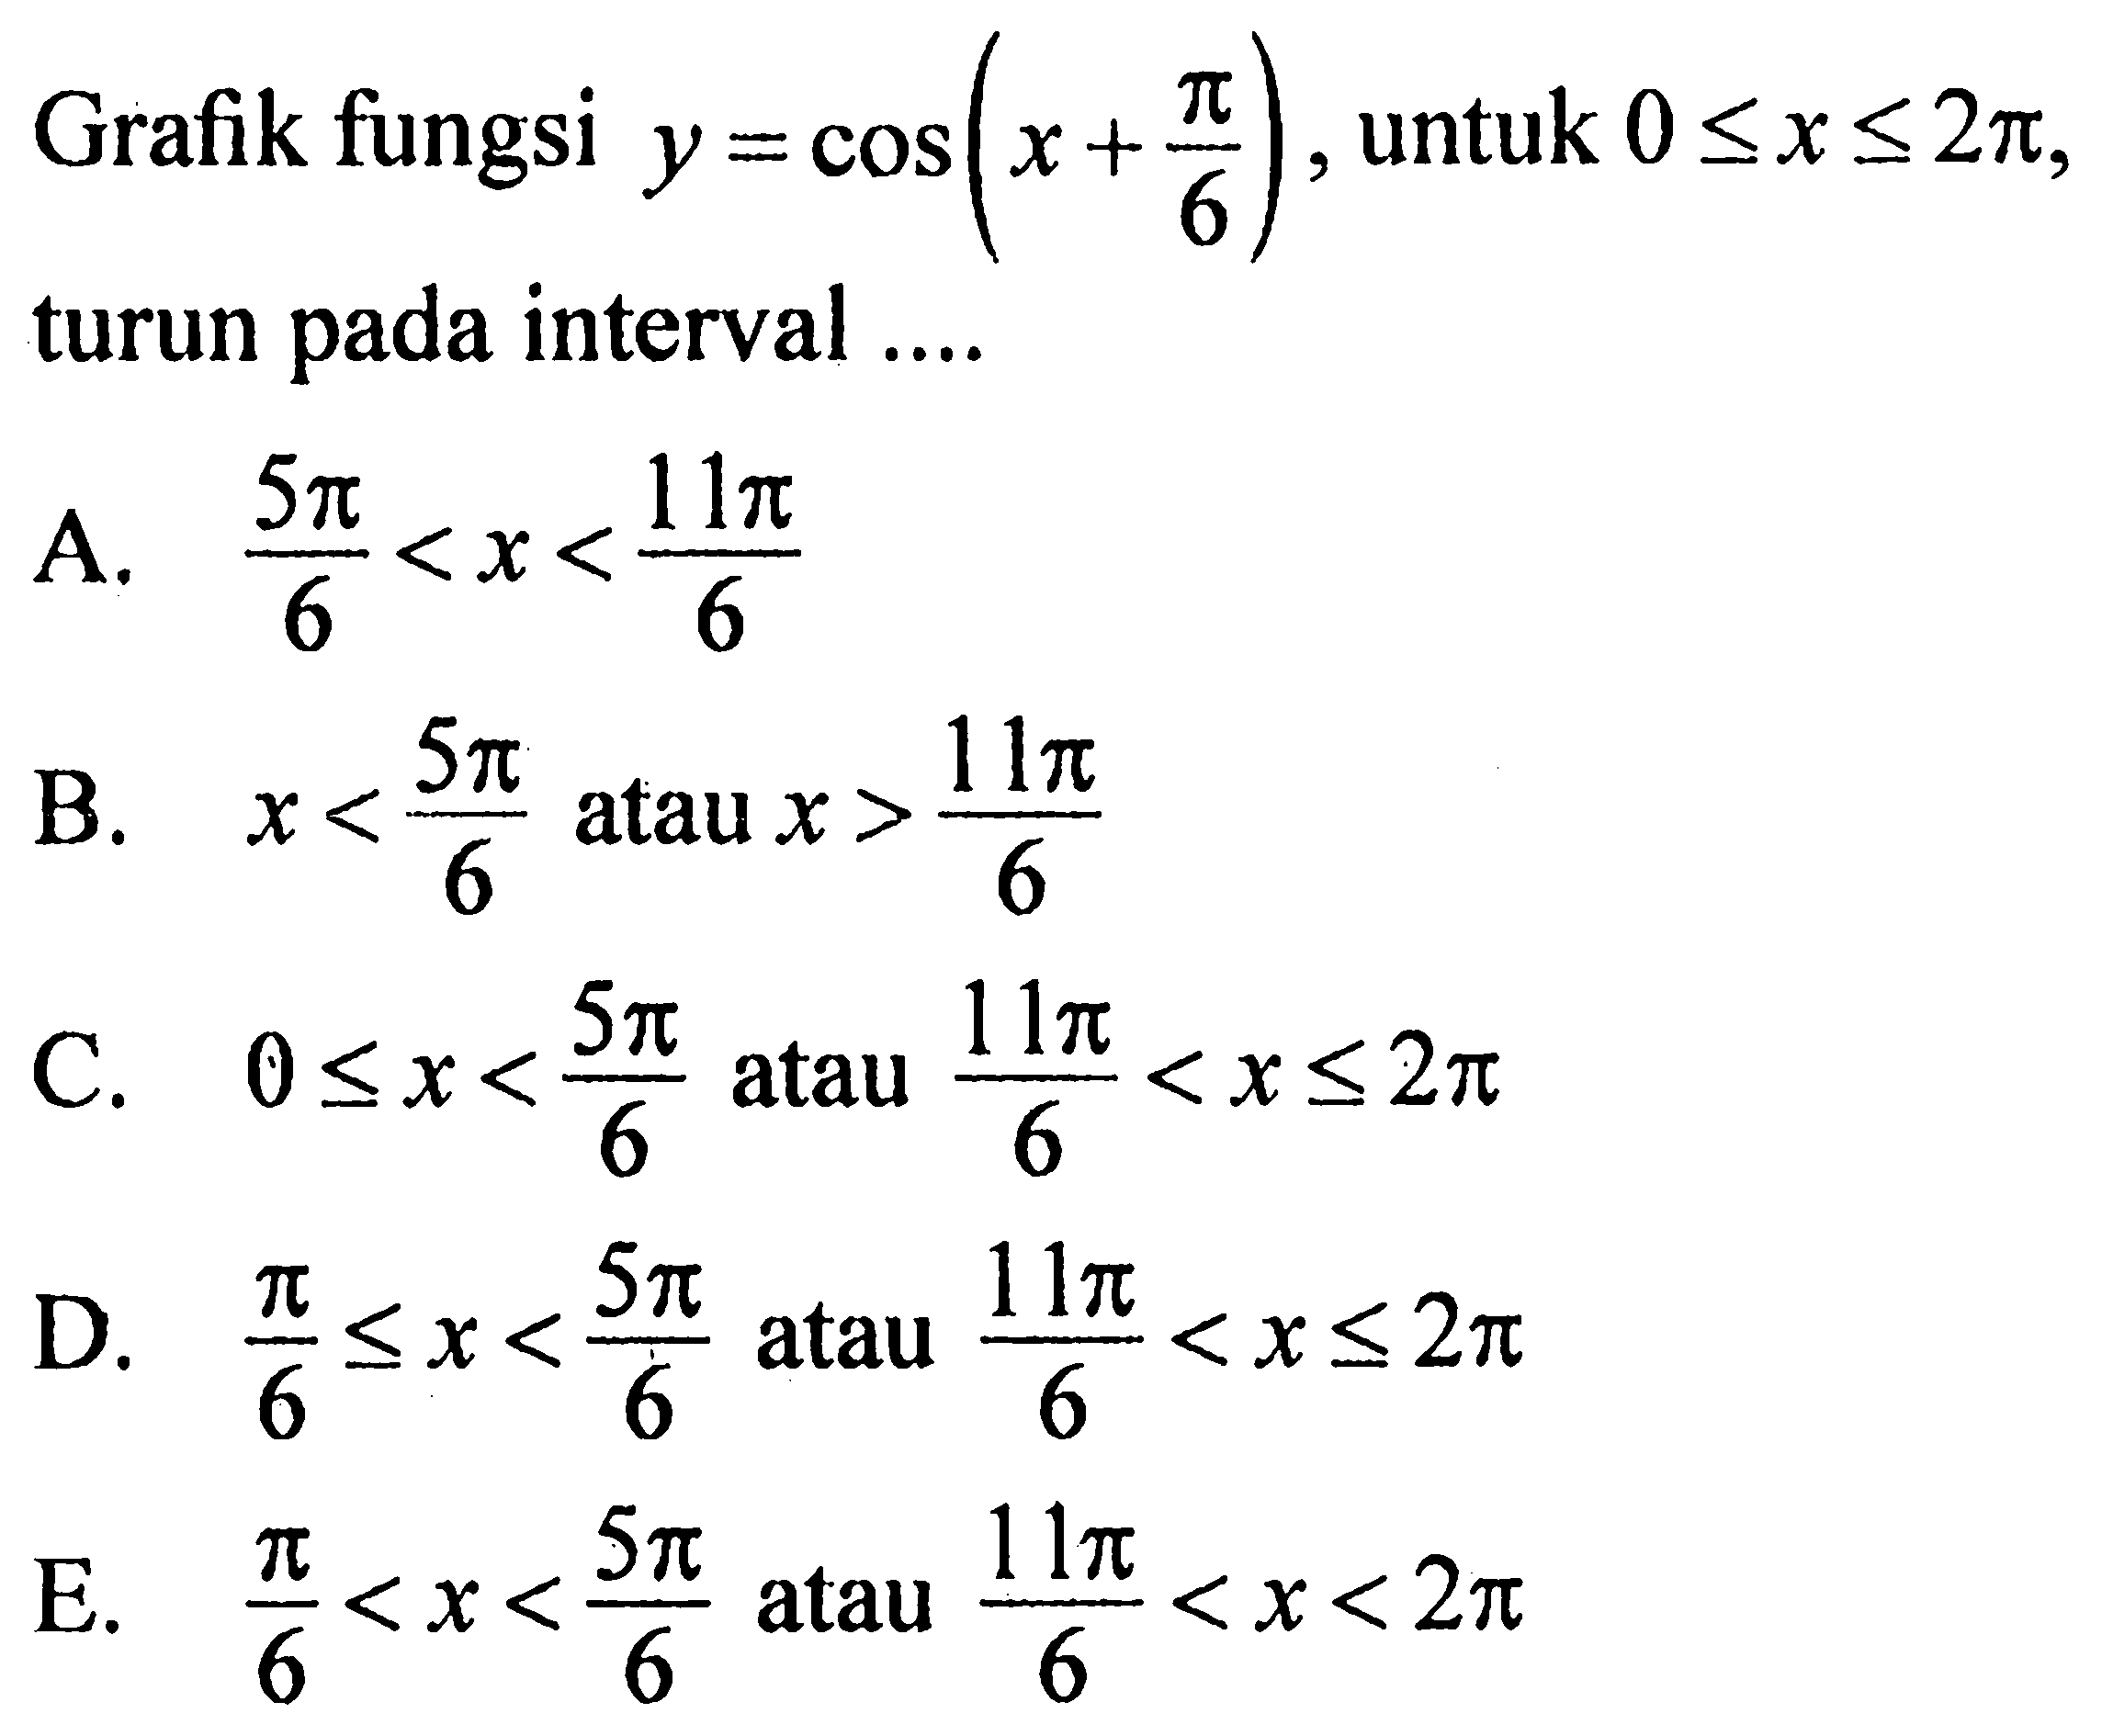 Grafik fungsi y=cos (x+pi/6), untuk 0<=x<=2 pi, turun pada interval .... 